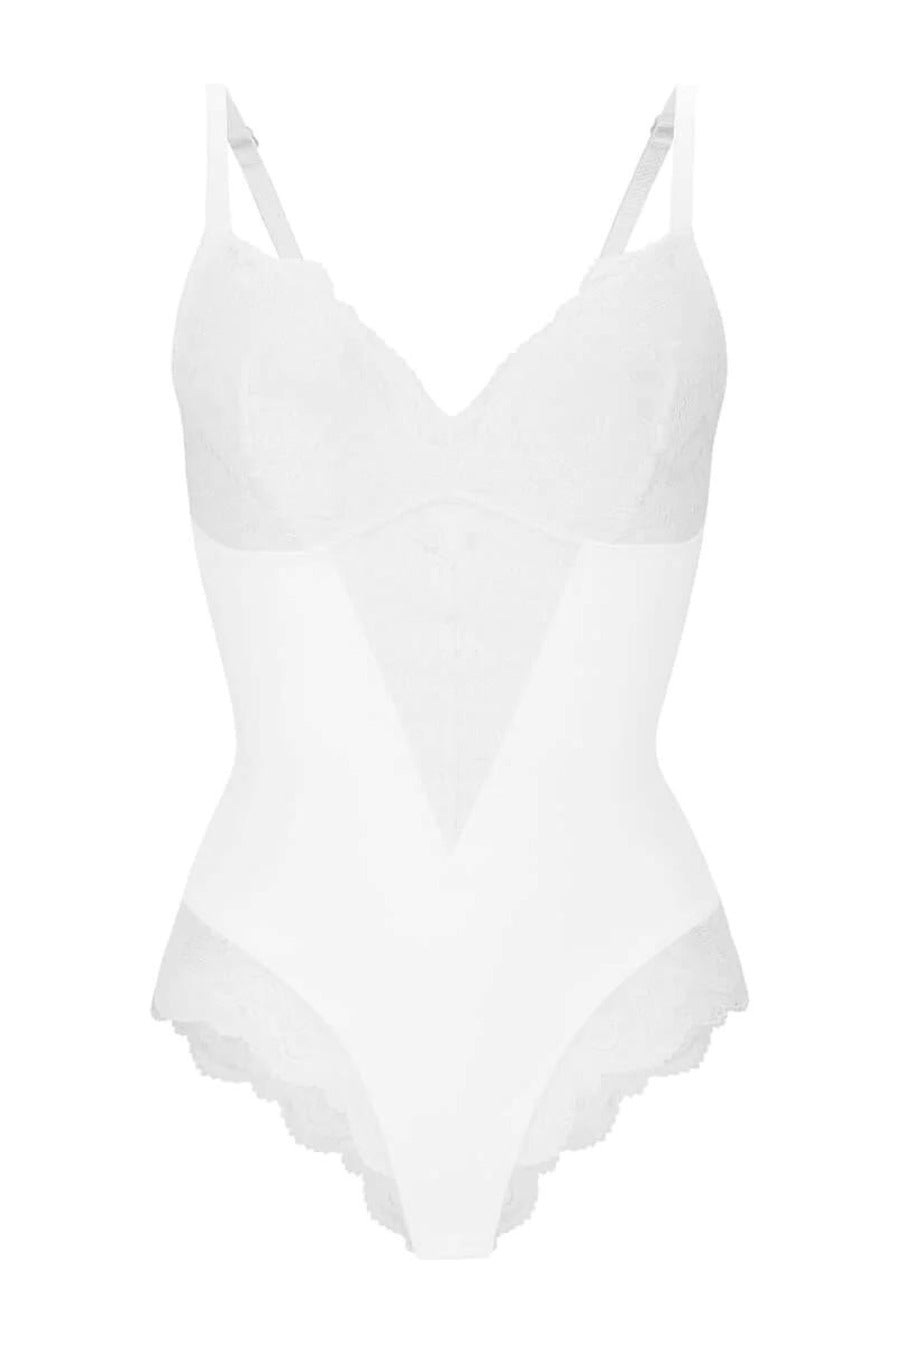 Aria Shaping Lace Bodysuit - White Contour Clothing